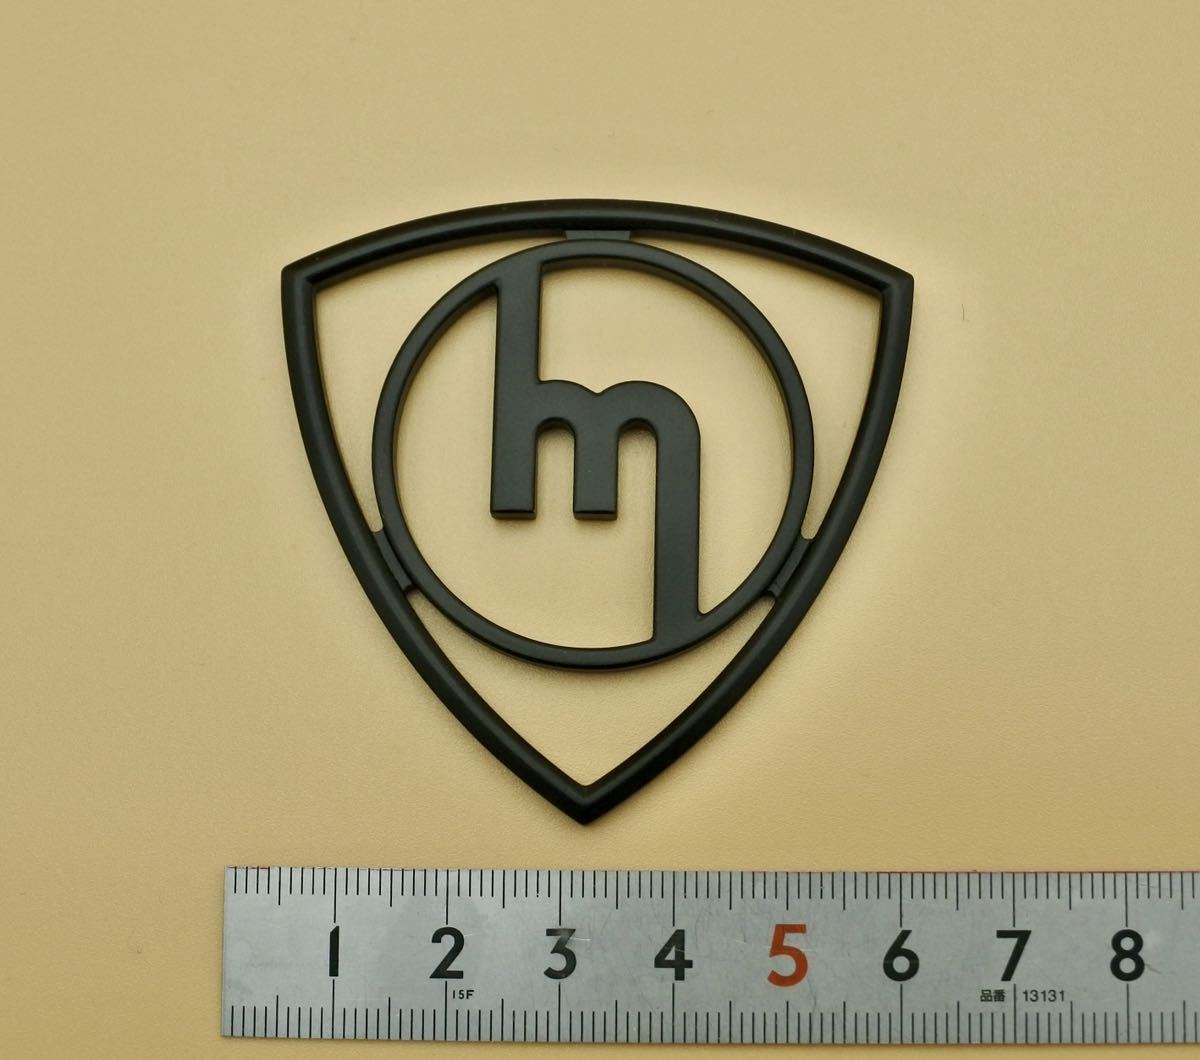  old Mazda Mazda rotary Mark original handmade emblem old car restore ( matted black )